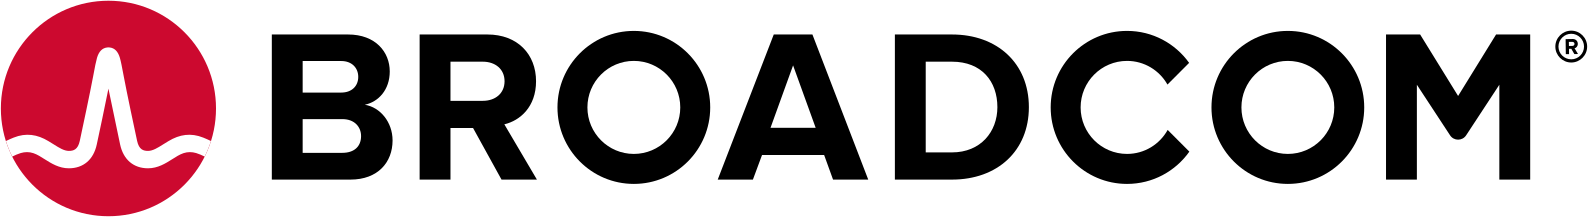 Broadcom logo large (transparent PNG)